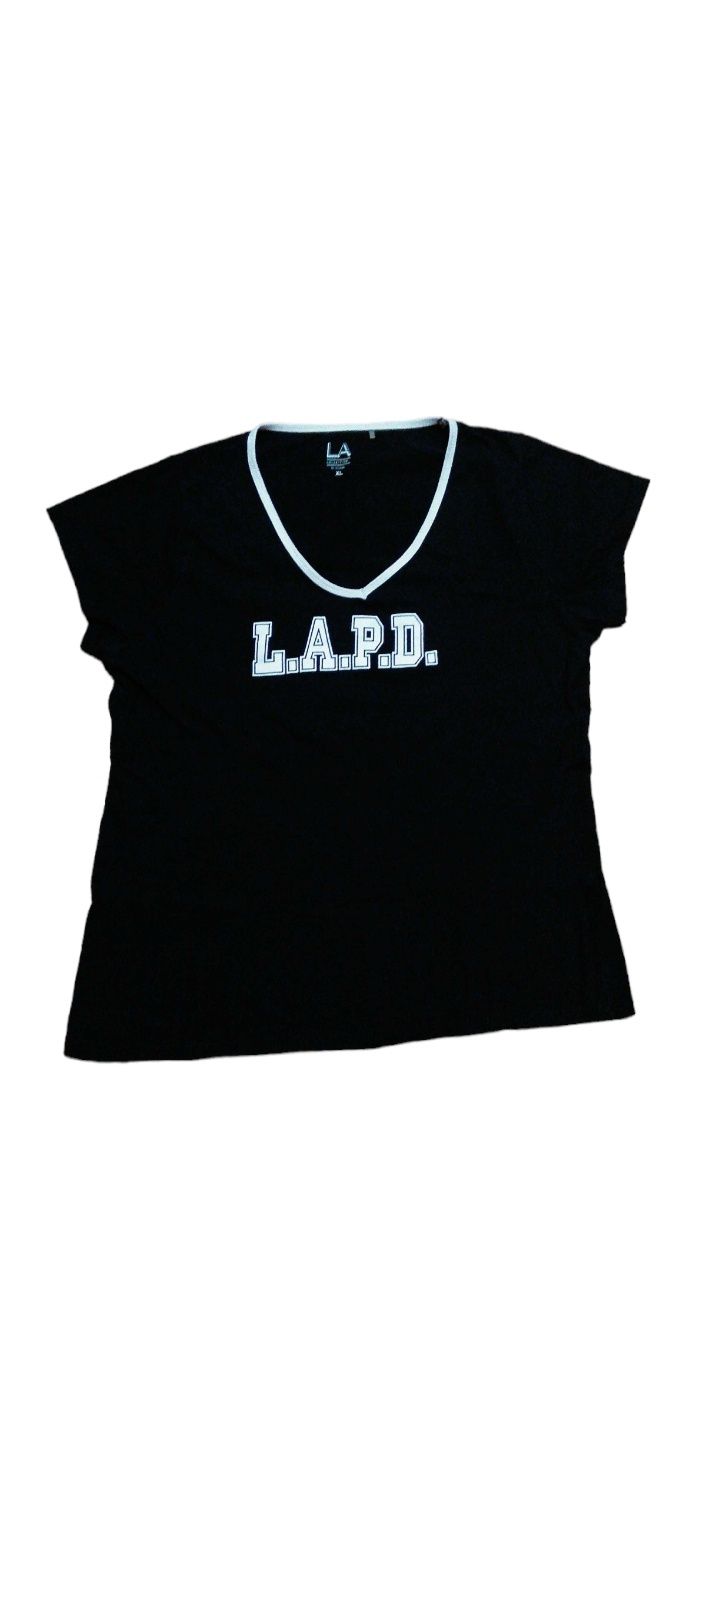 LAPD Los Angeles SWAT футболка